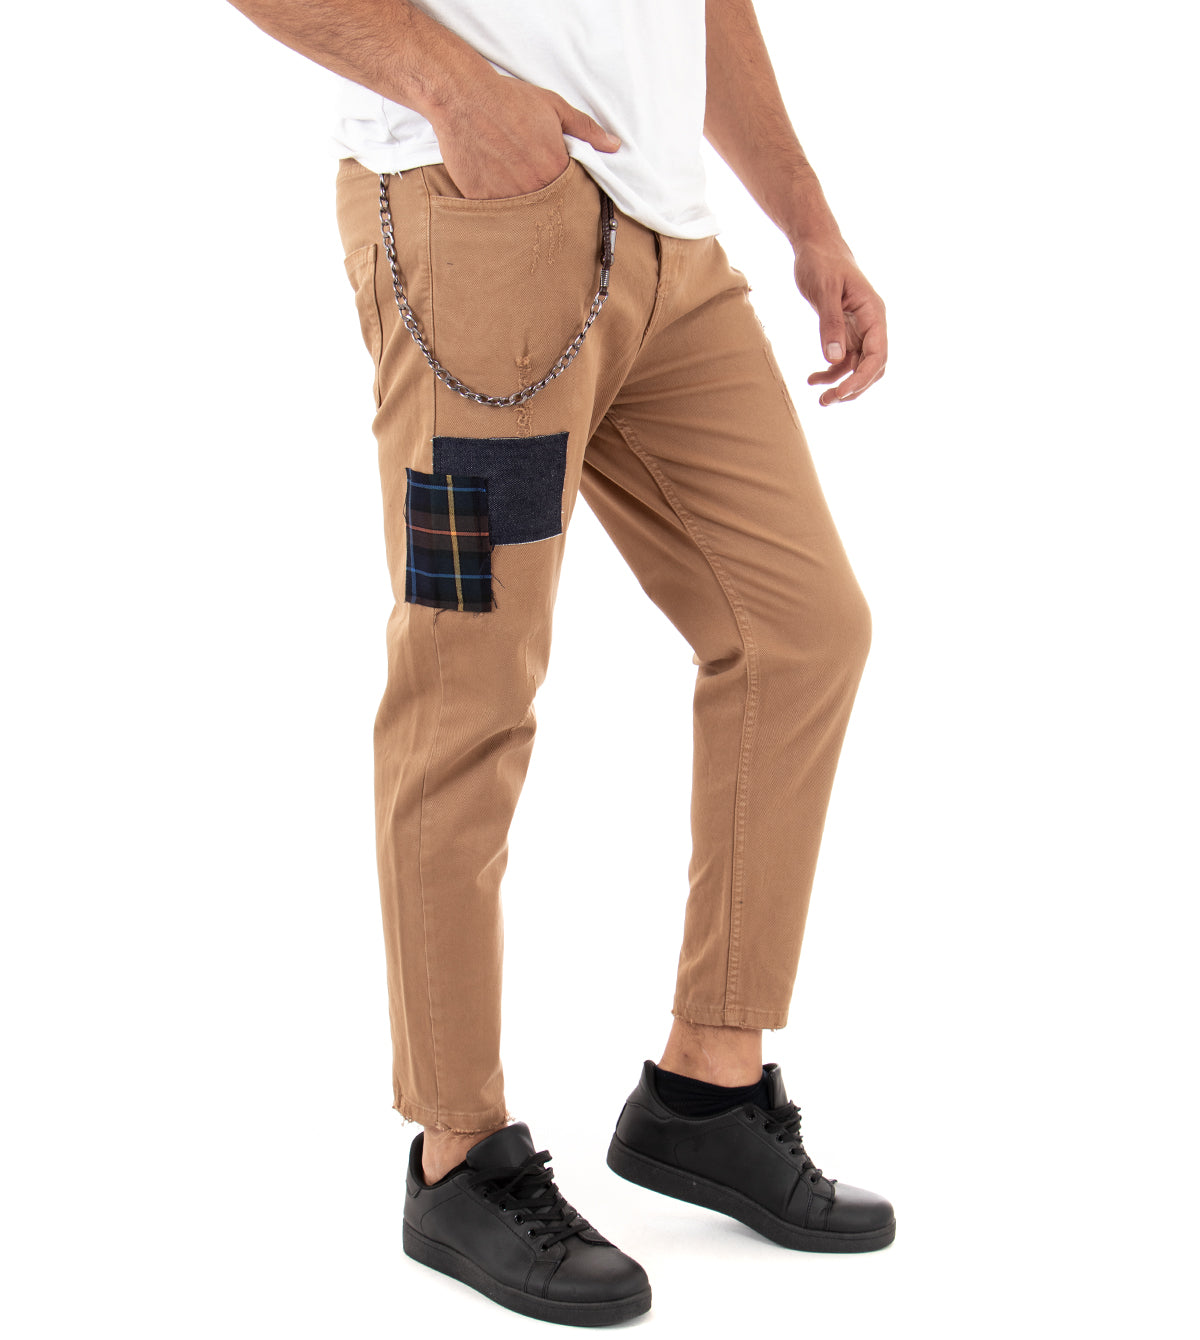 Pantaloni Jeans Uomo Slim Fit Camel Rotture Abrasioni Cinque Tasche Casual GIOSAL-P3318A